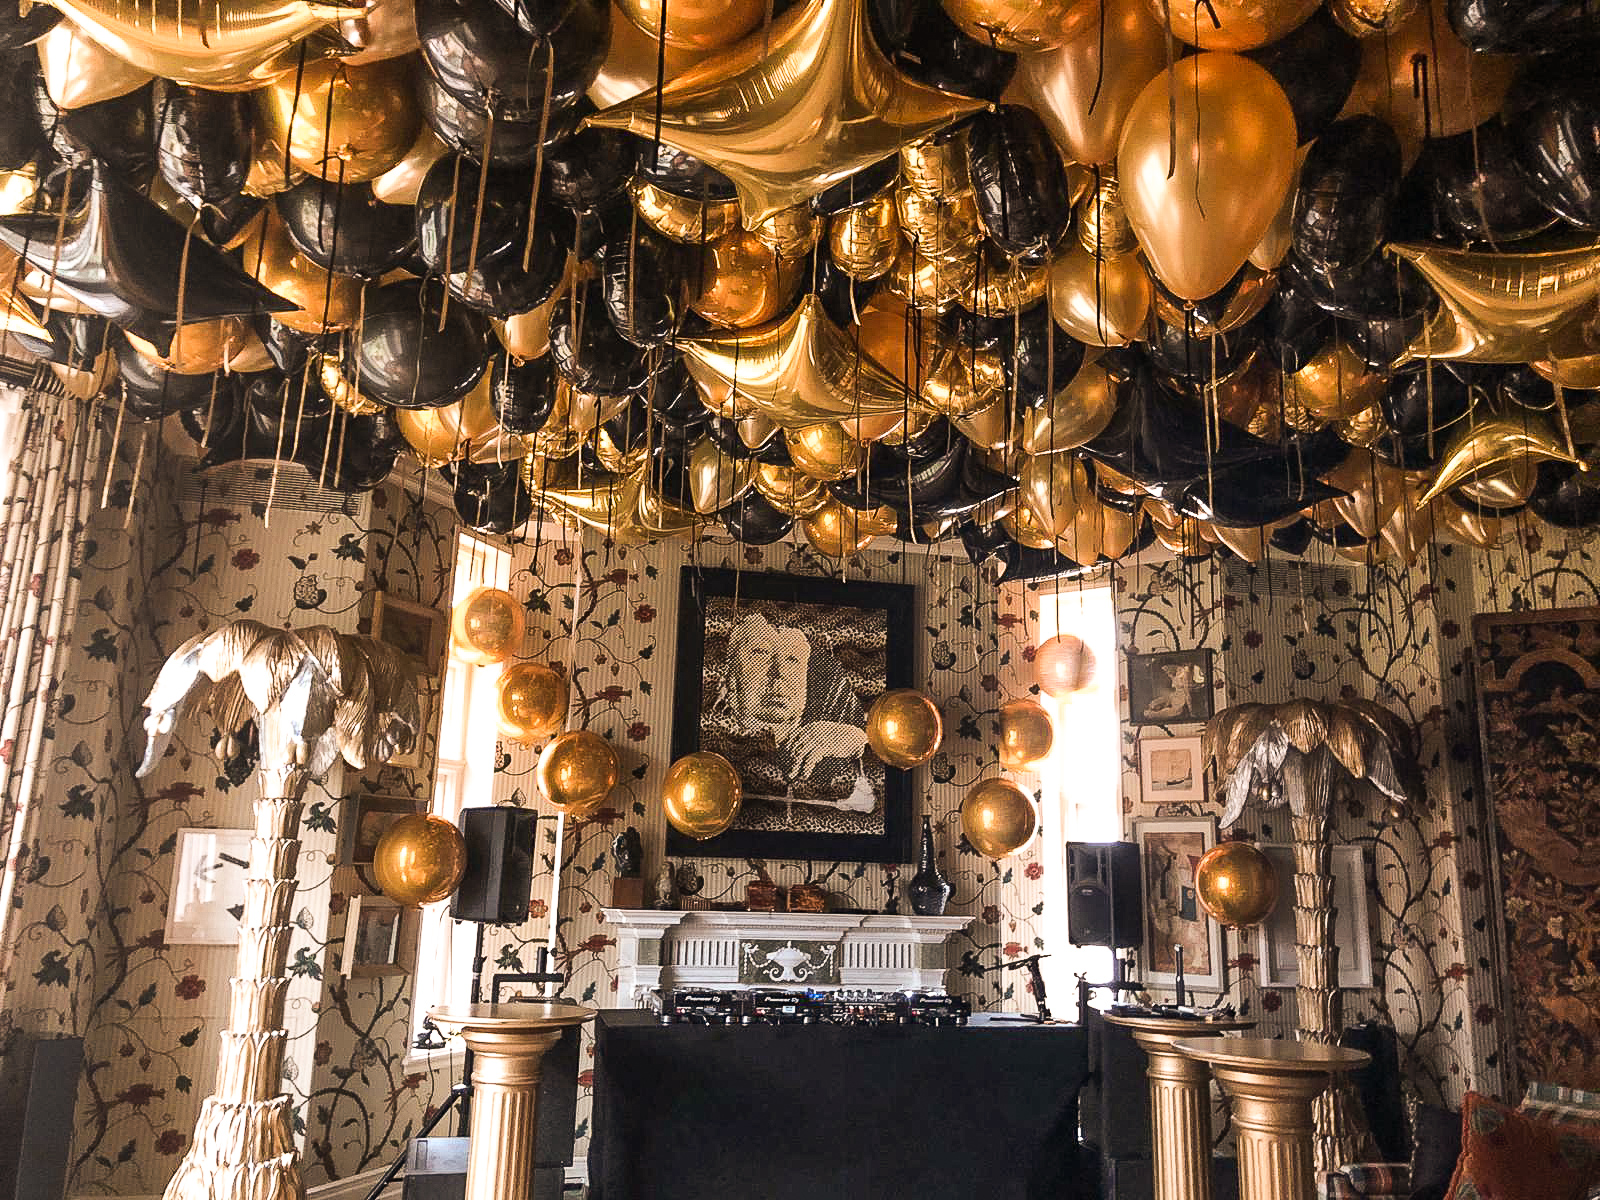 The Great Gatsby Themed Party - The Glitzy Balloon Company